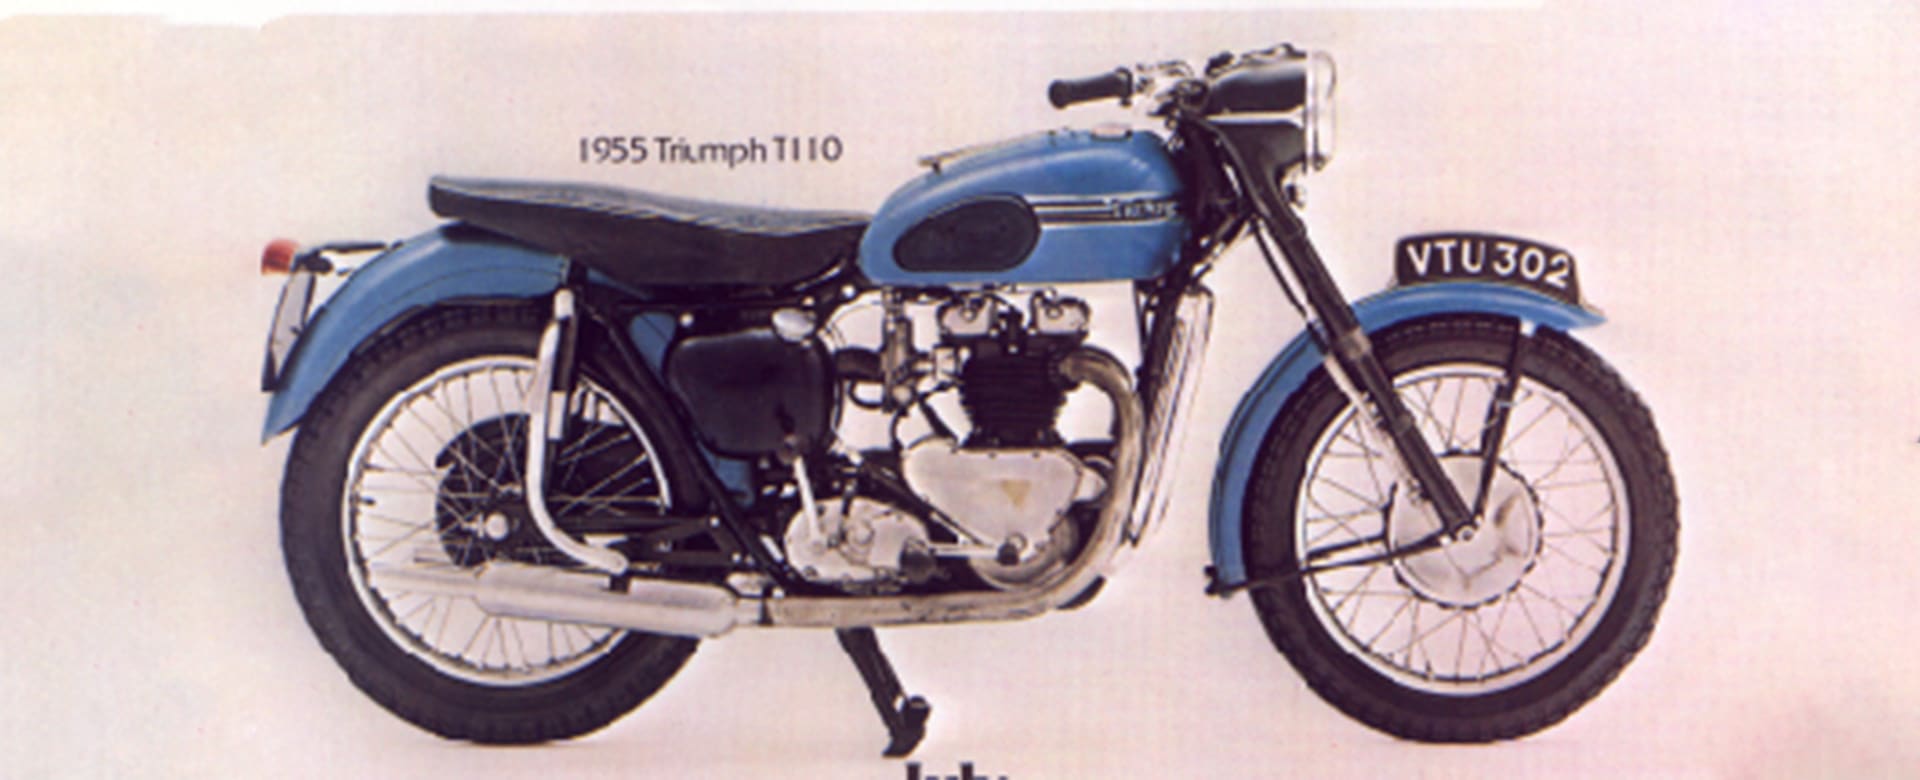 Triumph motorcycle 